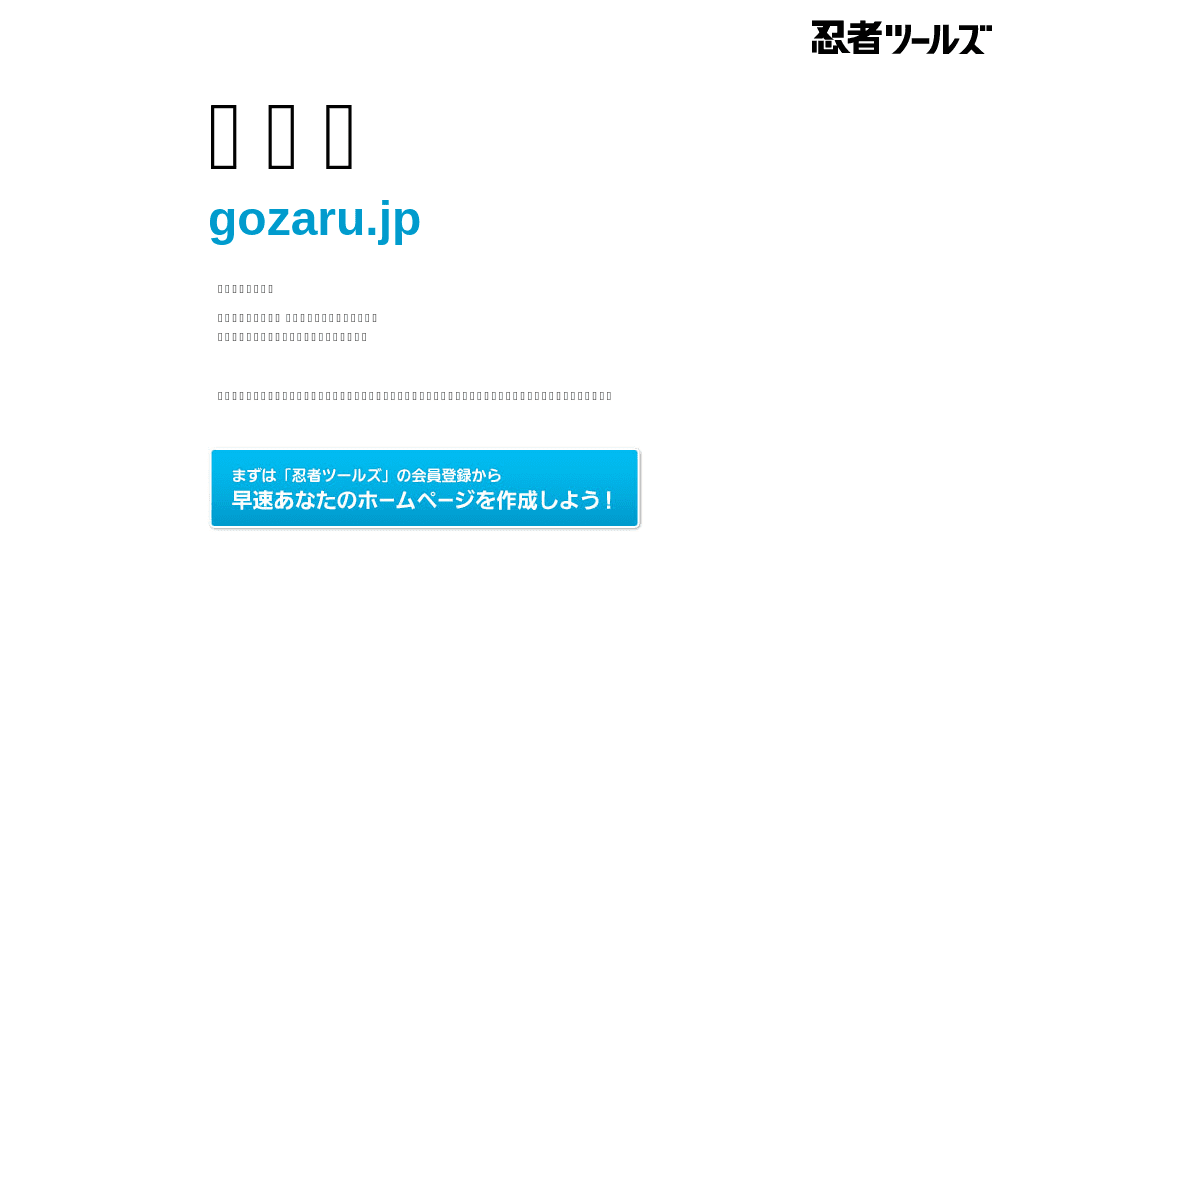 gozaru.jp | 忍者ホームページ - 忍者ツールズ